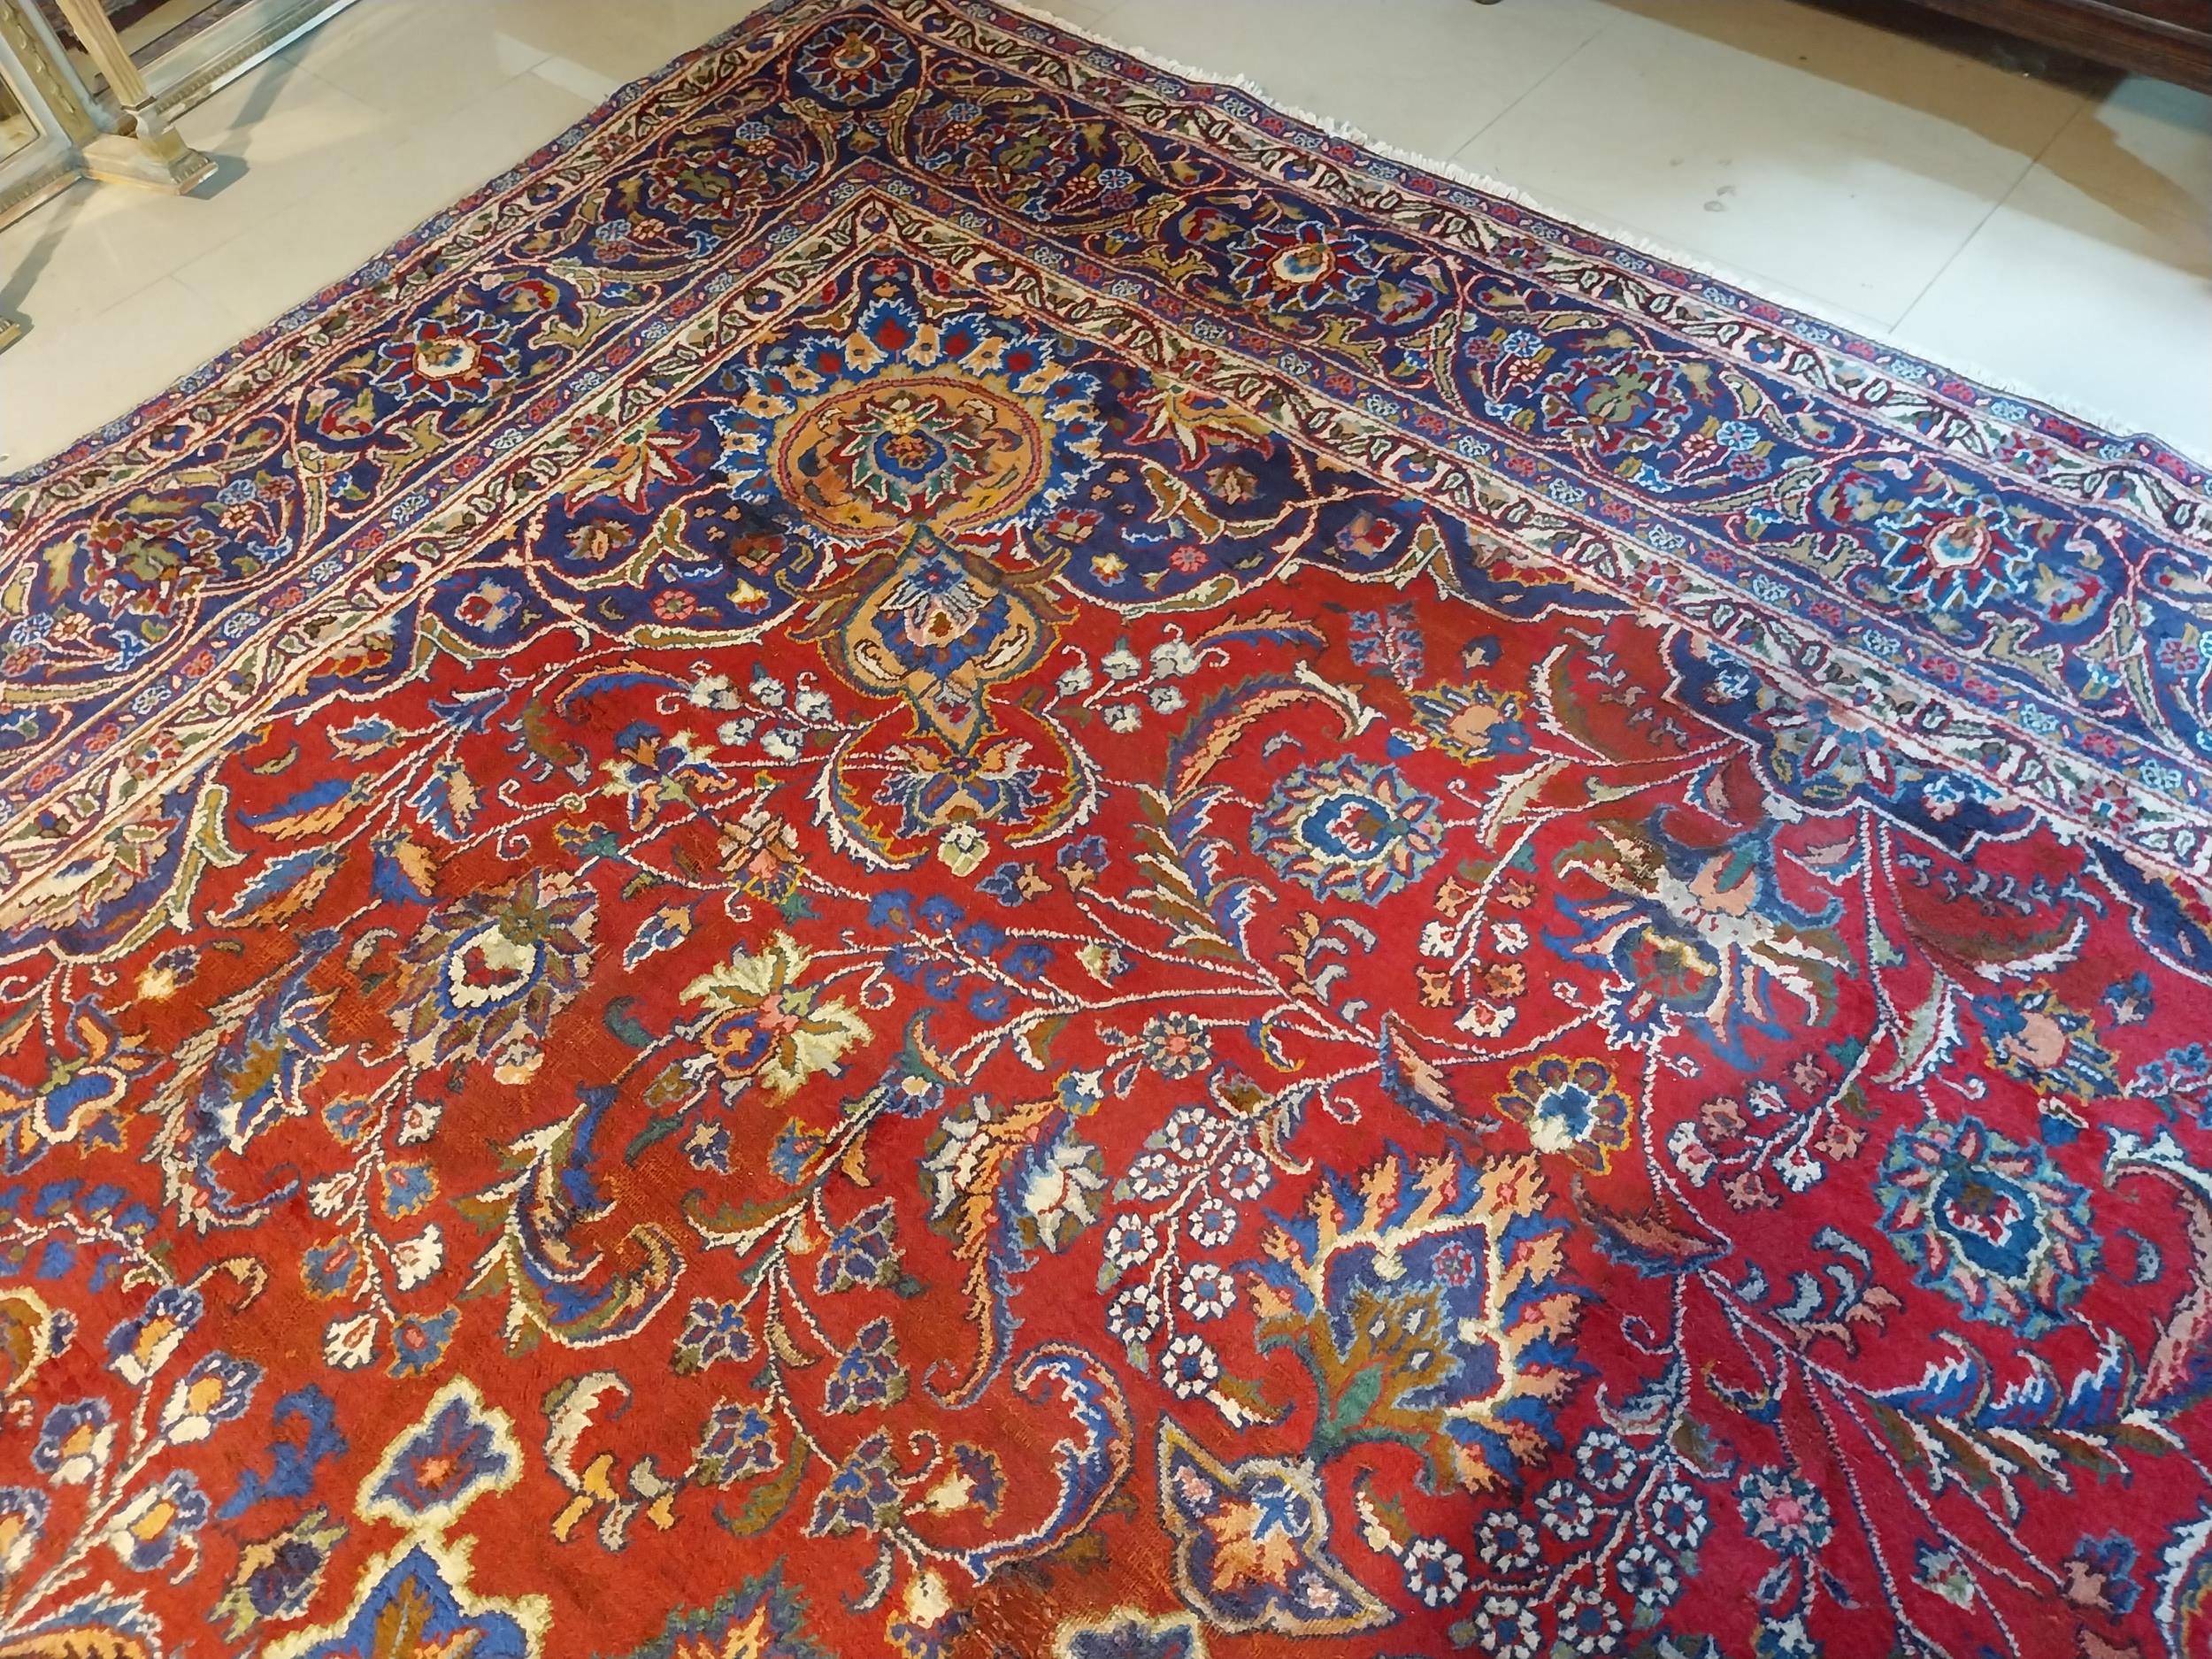 Decorative Persian carpet square {394cm L x 290cm W} - Image 4 of 4